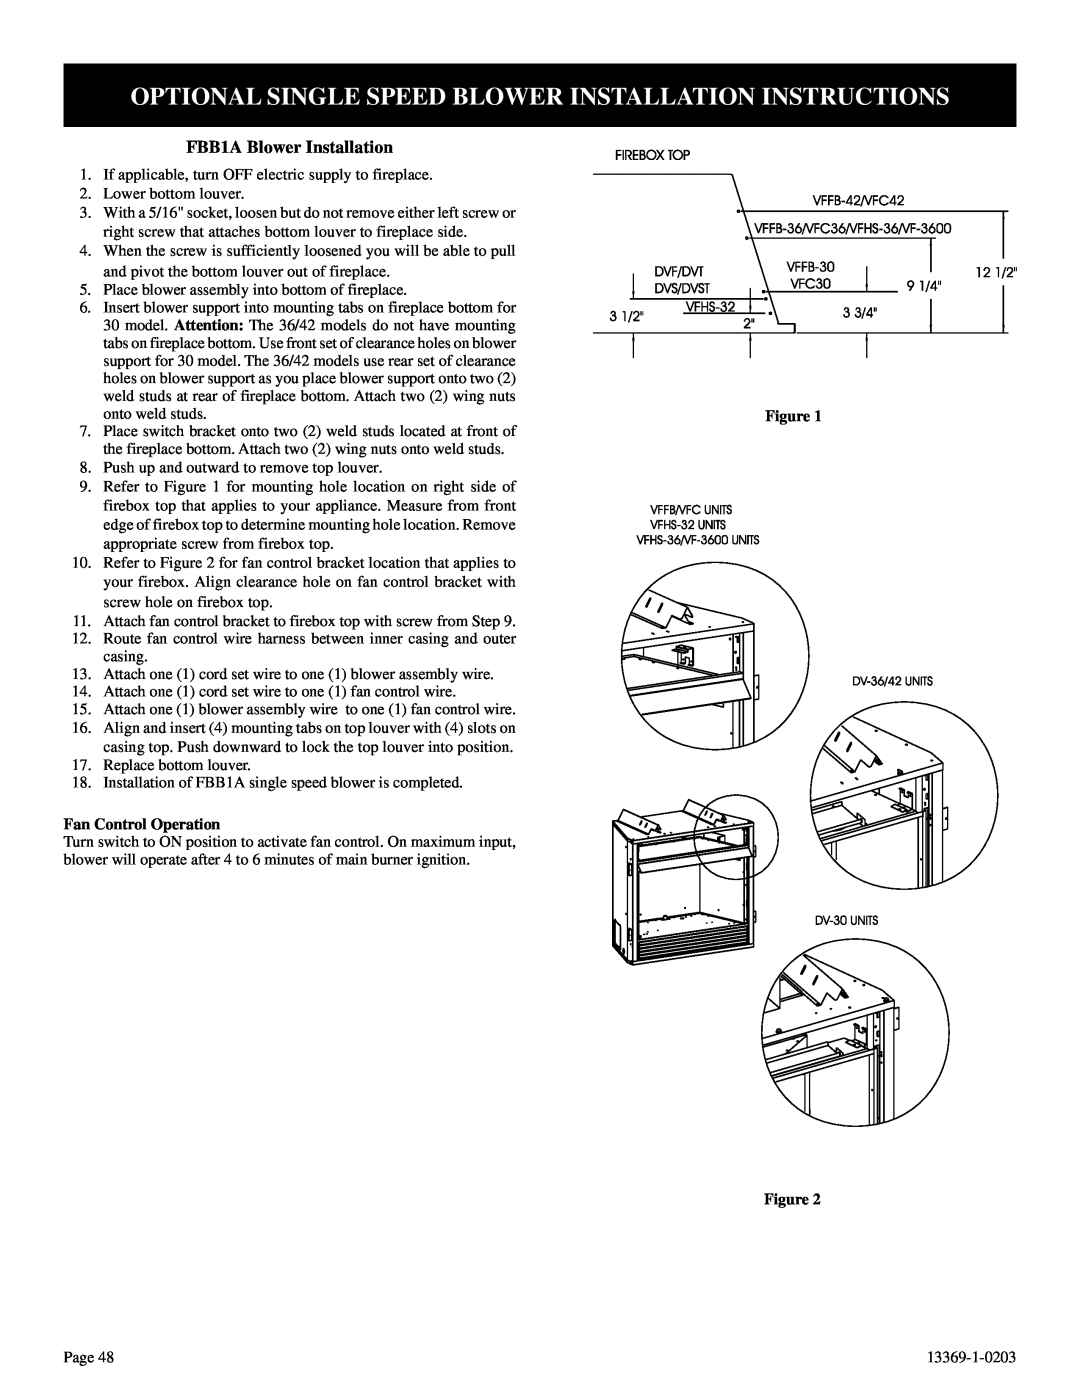 DVS 30-2 installation instructions FBB1A Blower Installation, Fan Control Operation, Figure Figure 